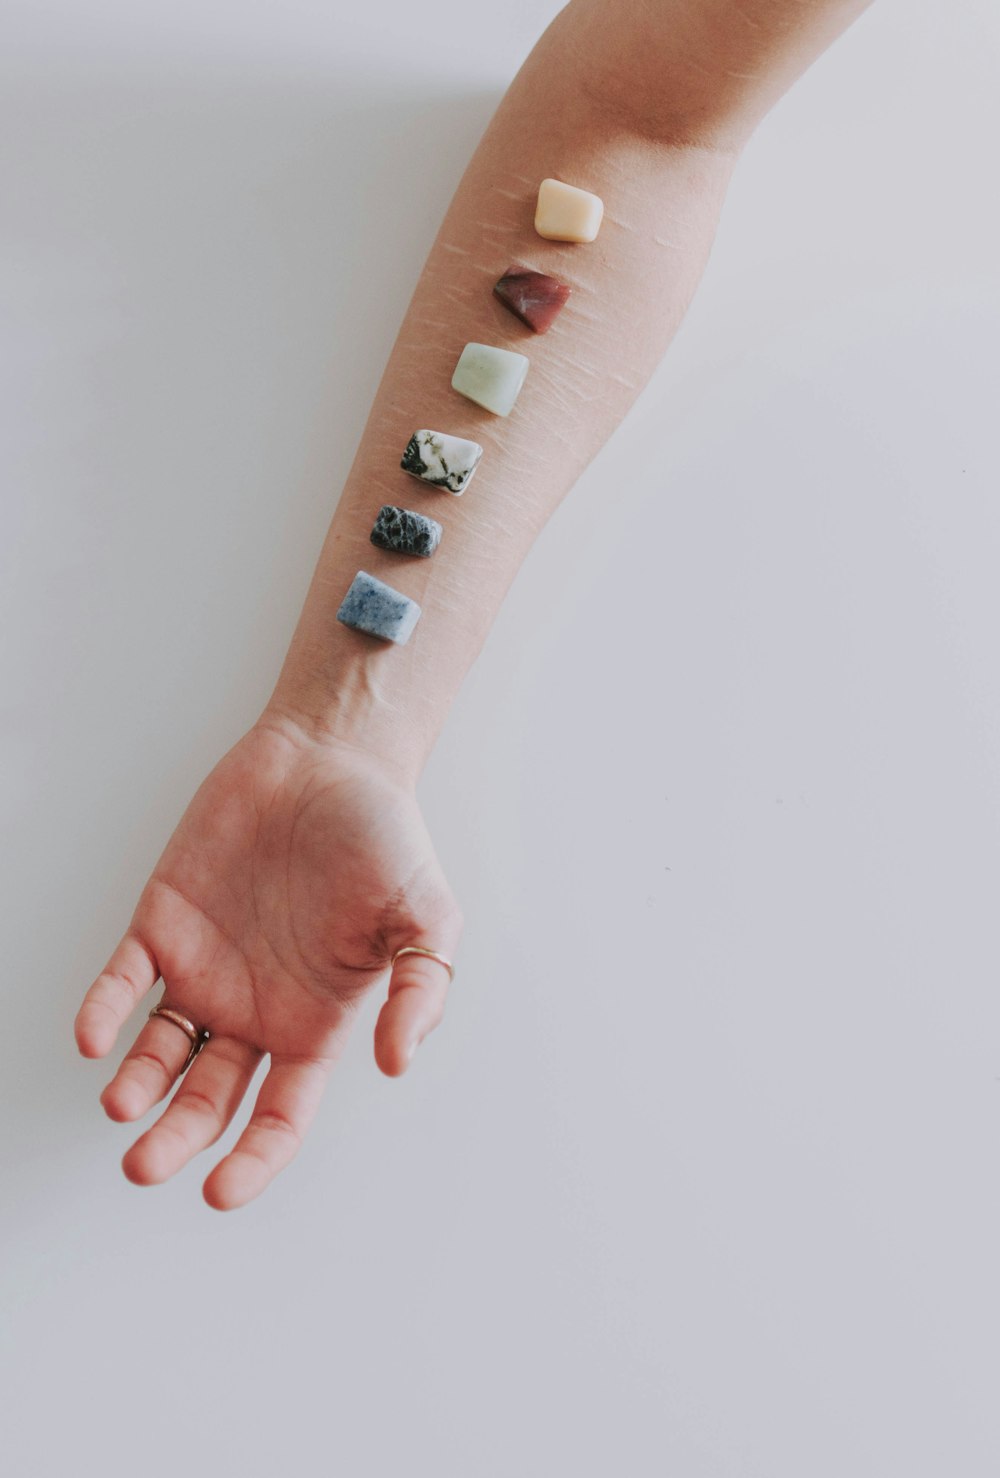 stones on person's arm